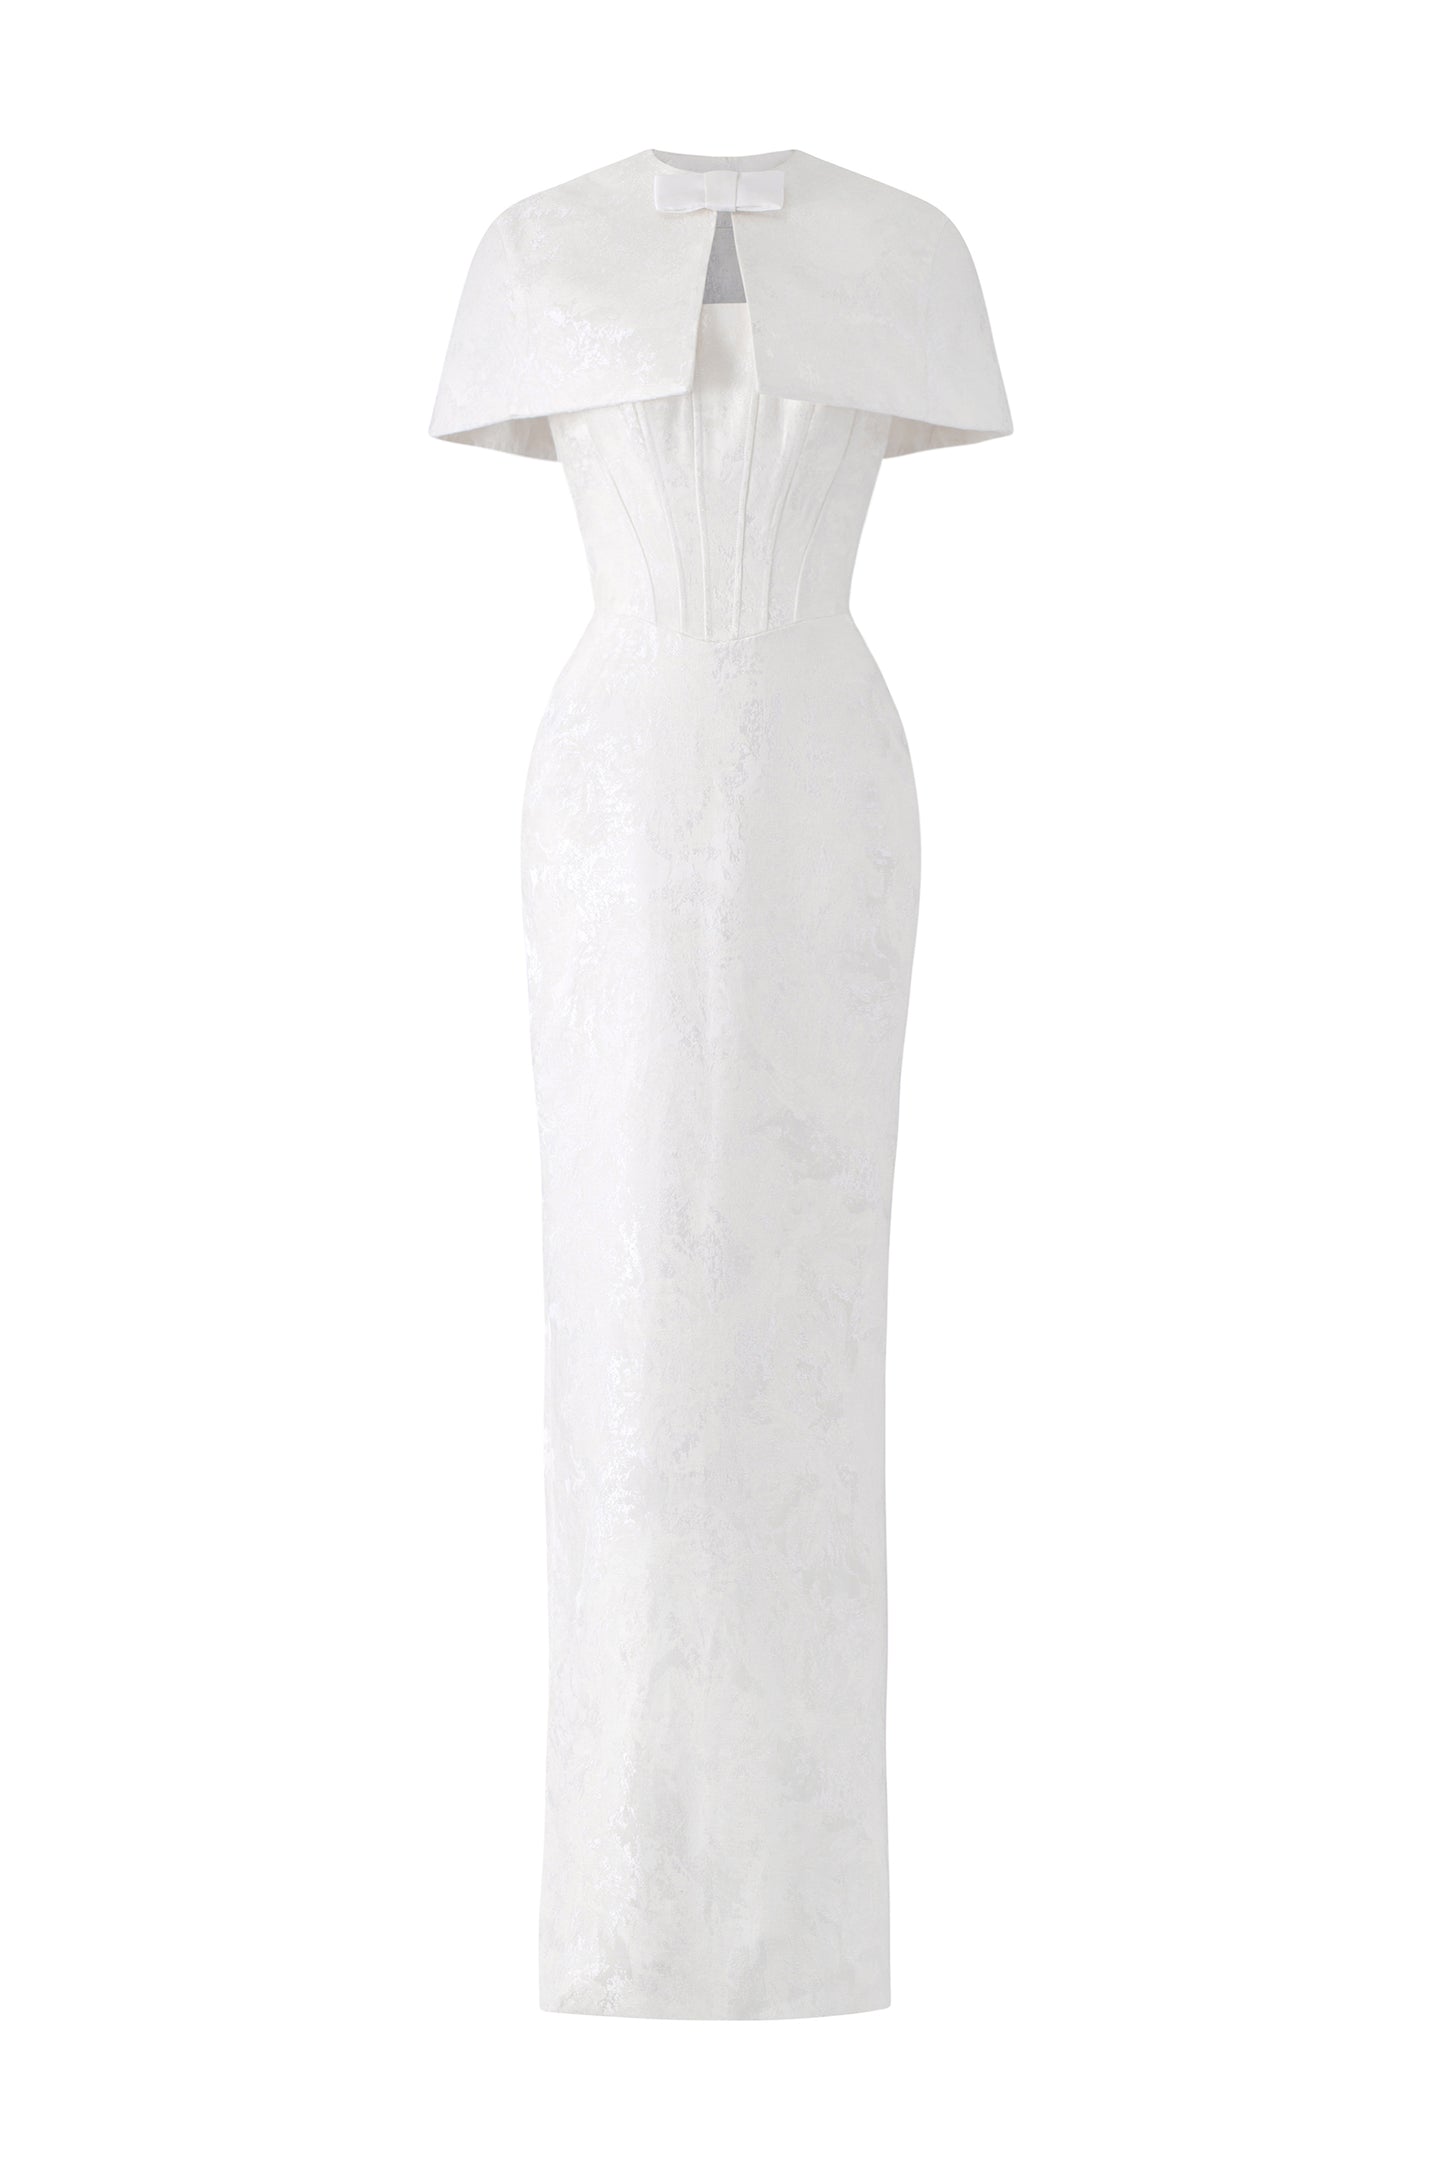 Burstier Gown With Mini Cape